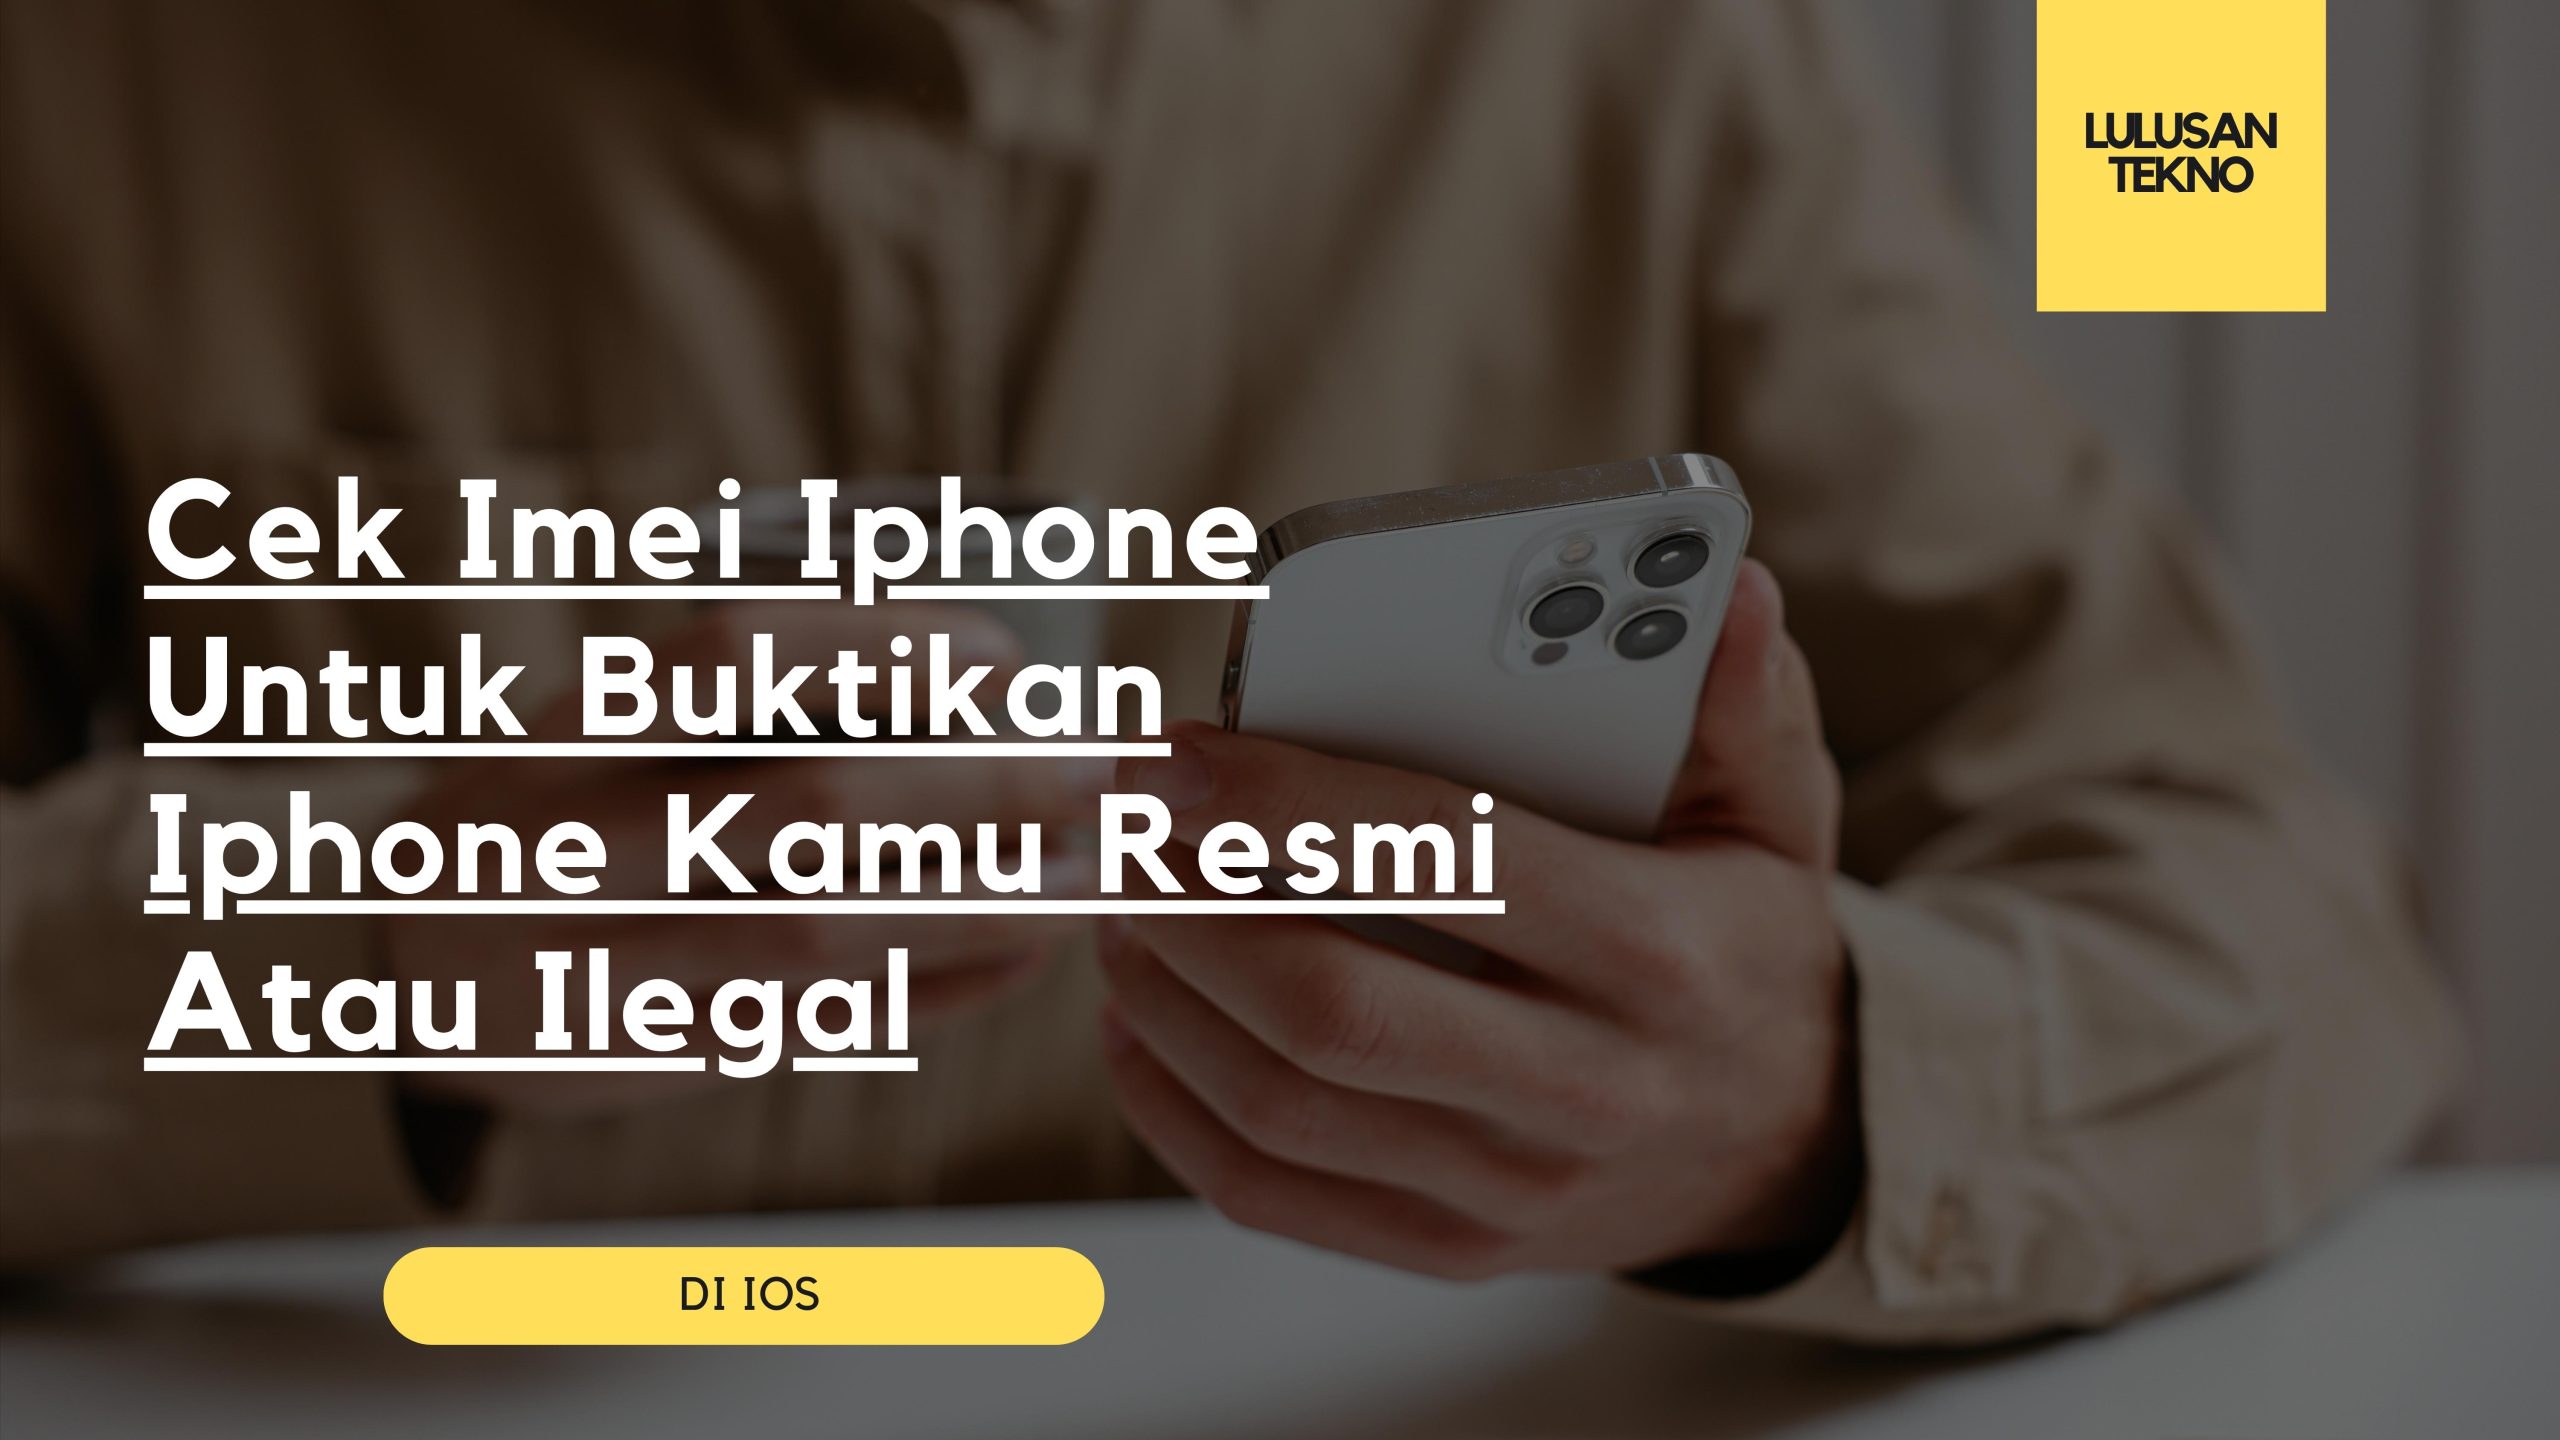 Cek Imei Iphone Untuk Buktikan Iphone Kamu Resmi Atau Ilegal